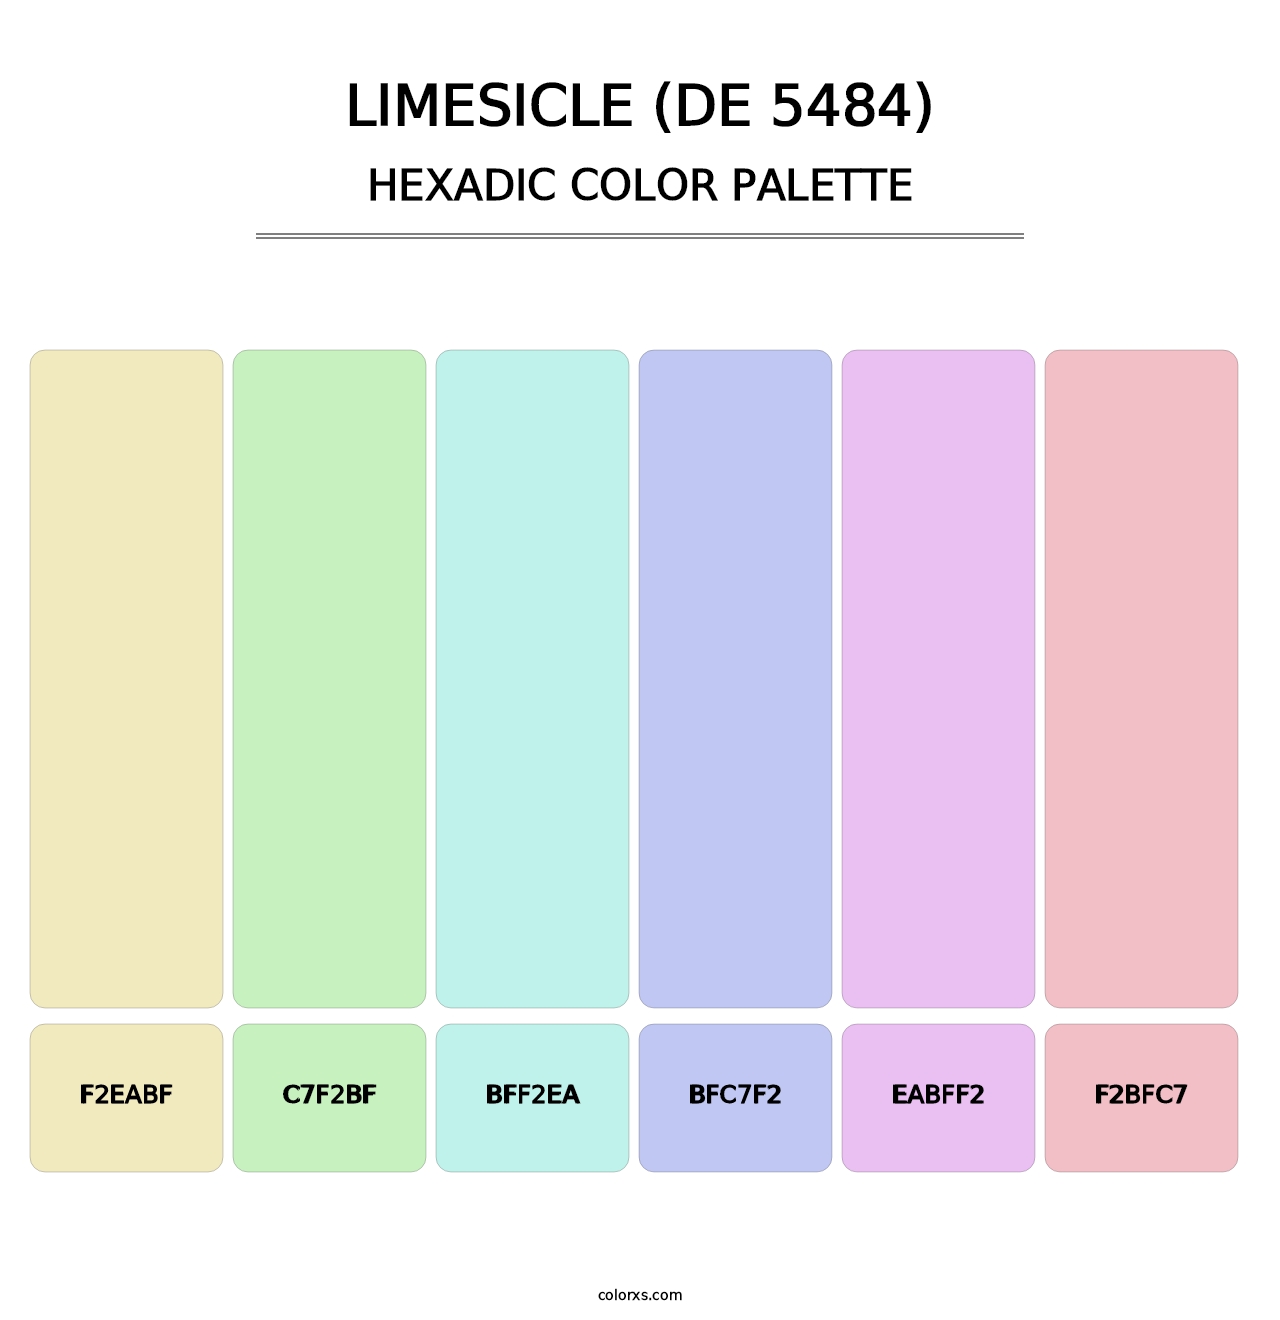 Limesicle (DE 5484) - Hexadic Color Palette